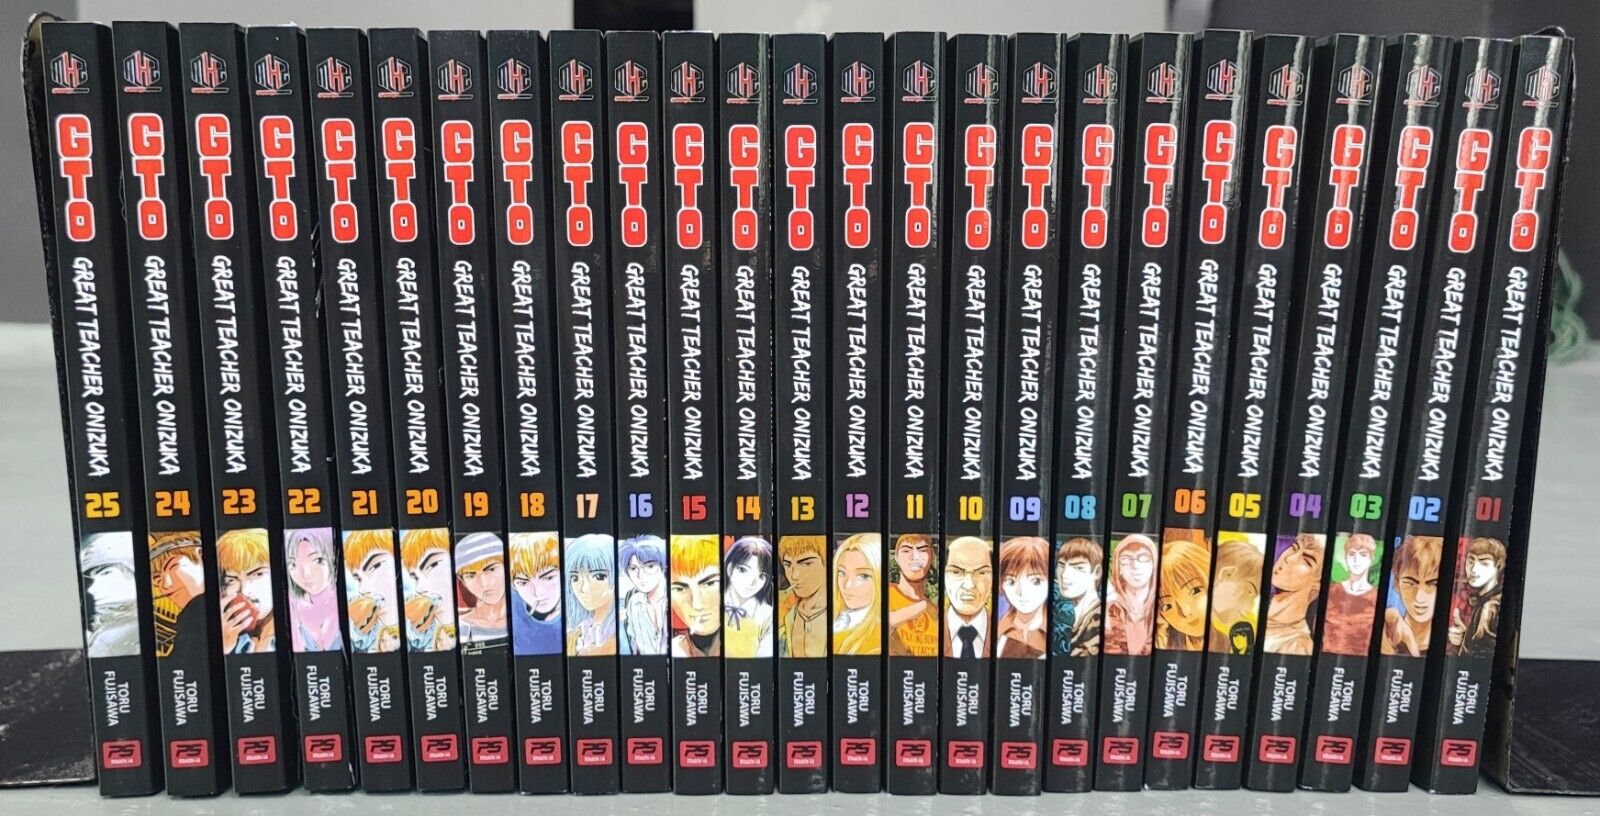 GTO: Great Teacher Onizuka Manga Volume 1-25 Complete Set English Version Comic